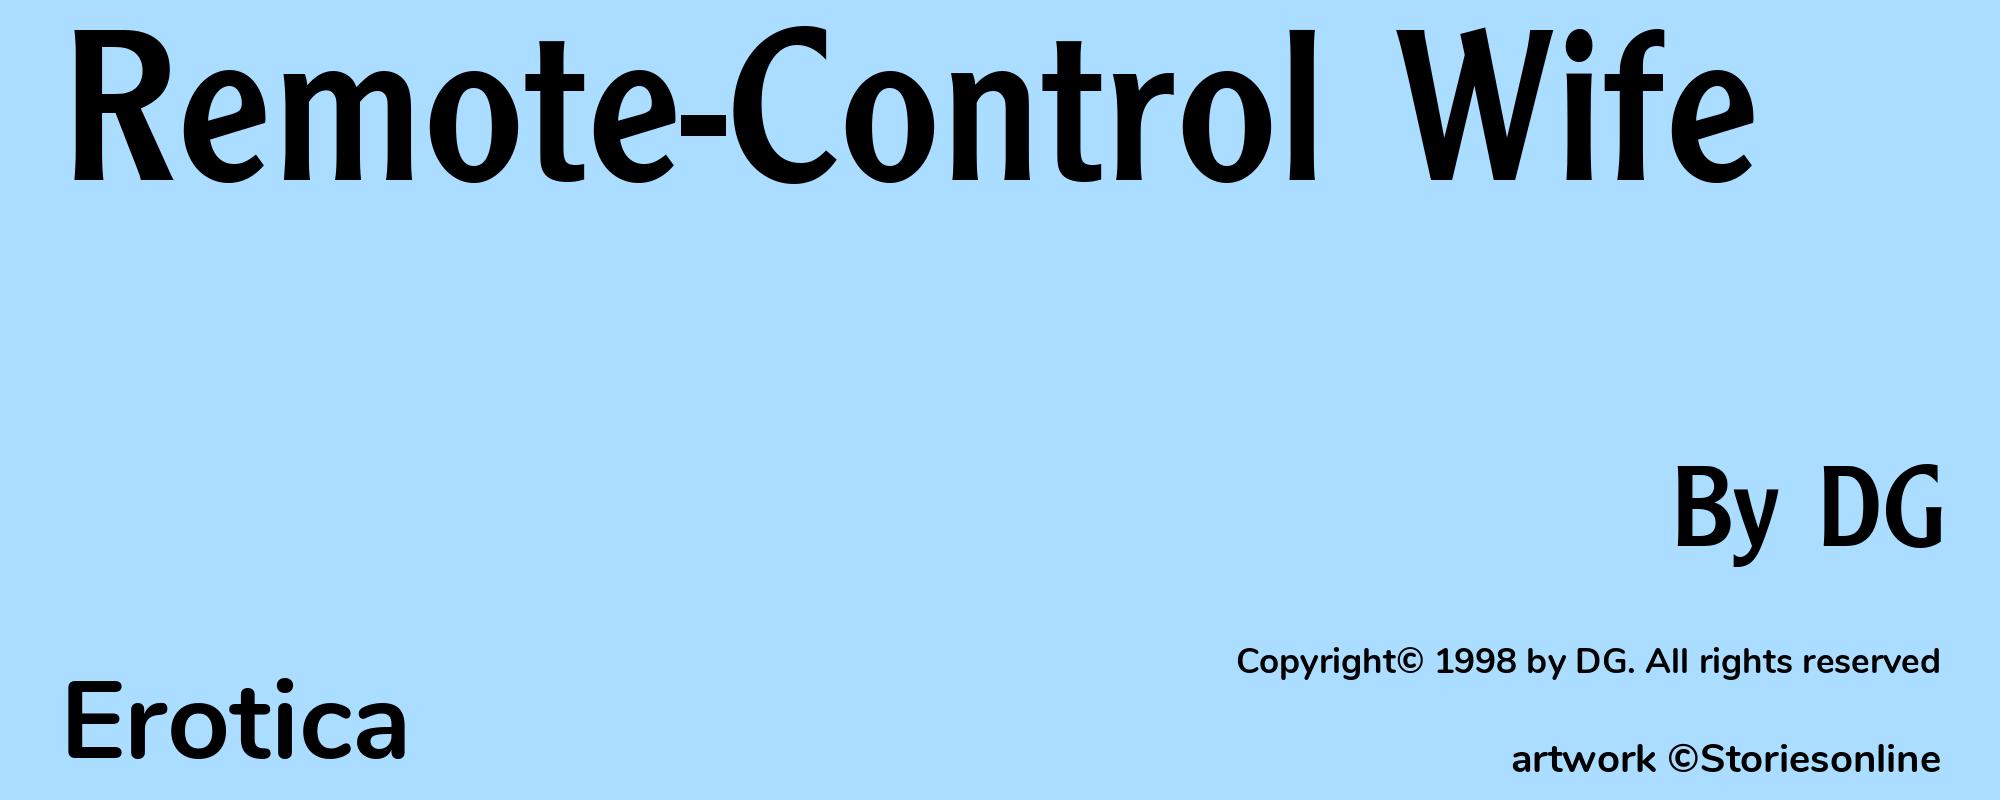 Remote-Control Wife - Cover